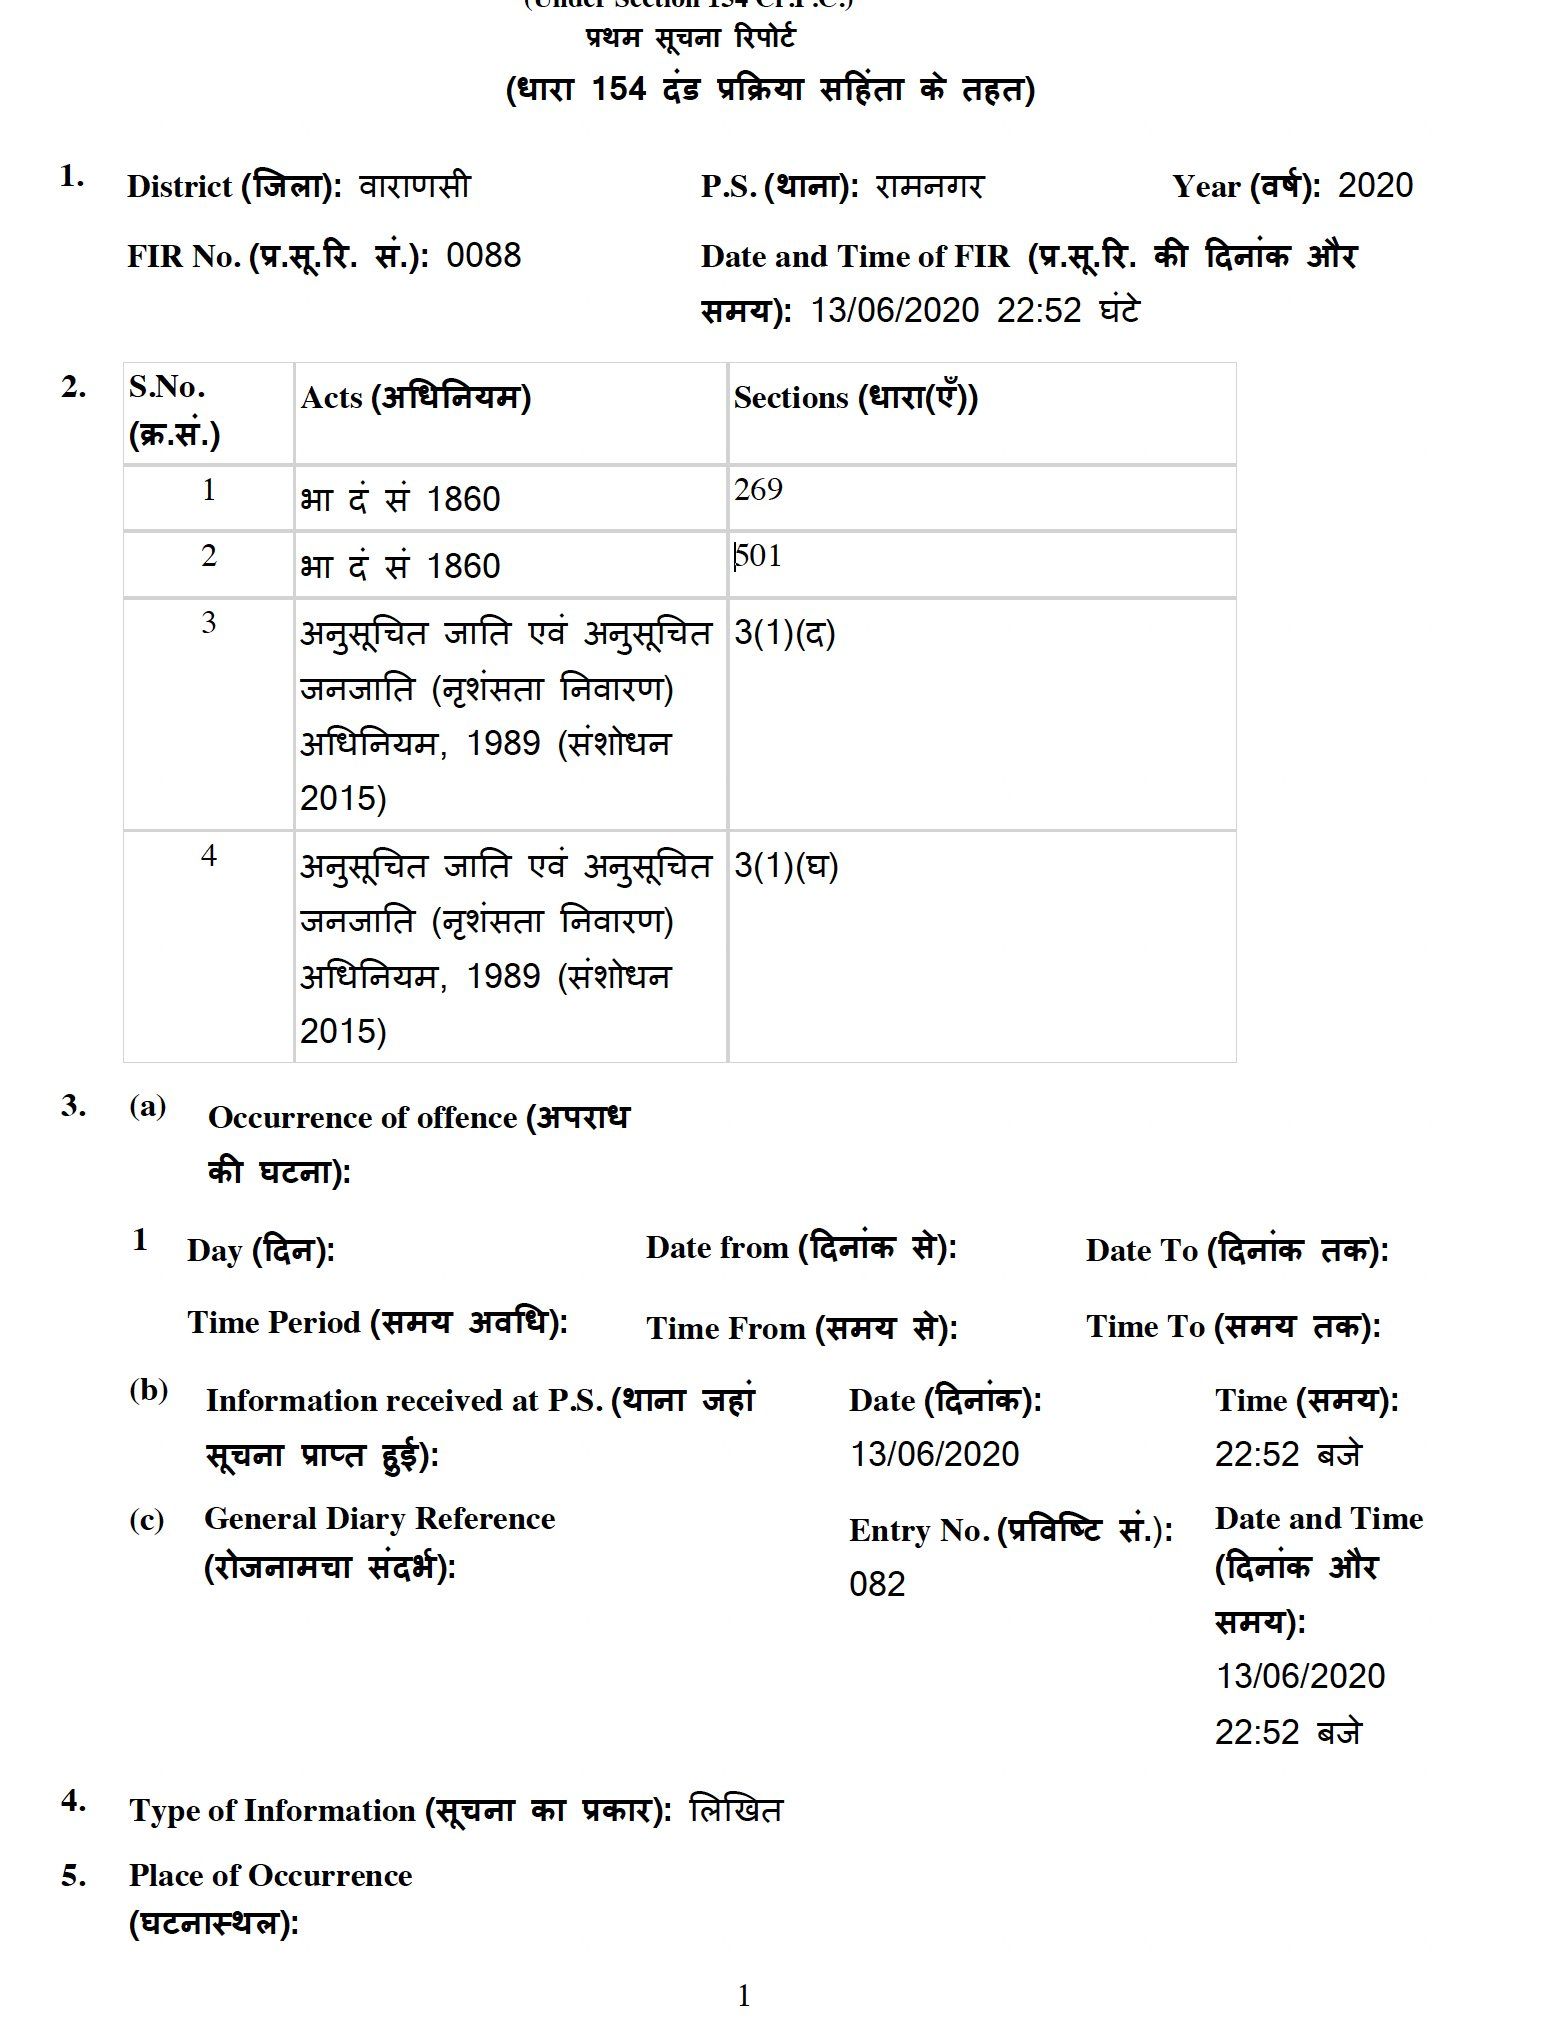 UP Police registered FIR against Scroll.in executive editor Supriya Sharma  - Satya Hindi